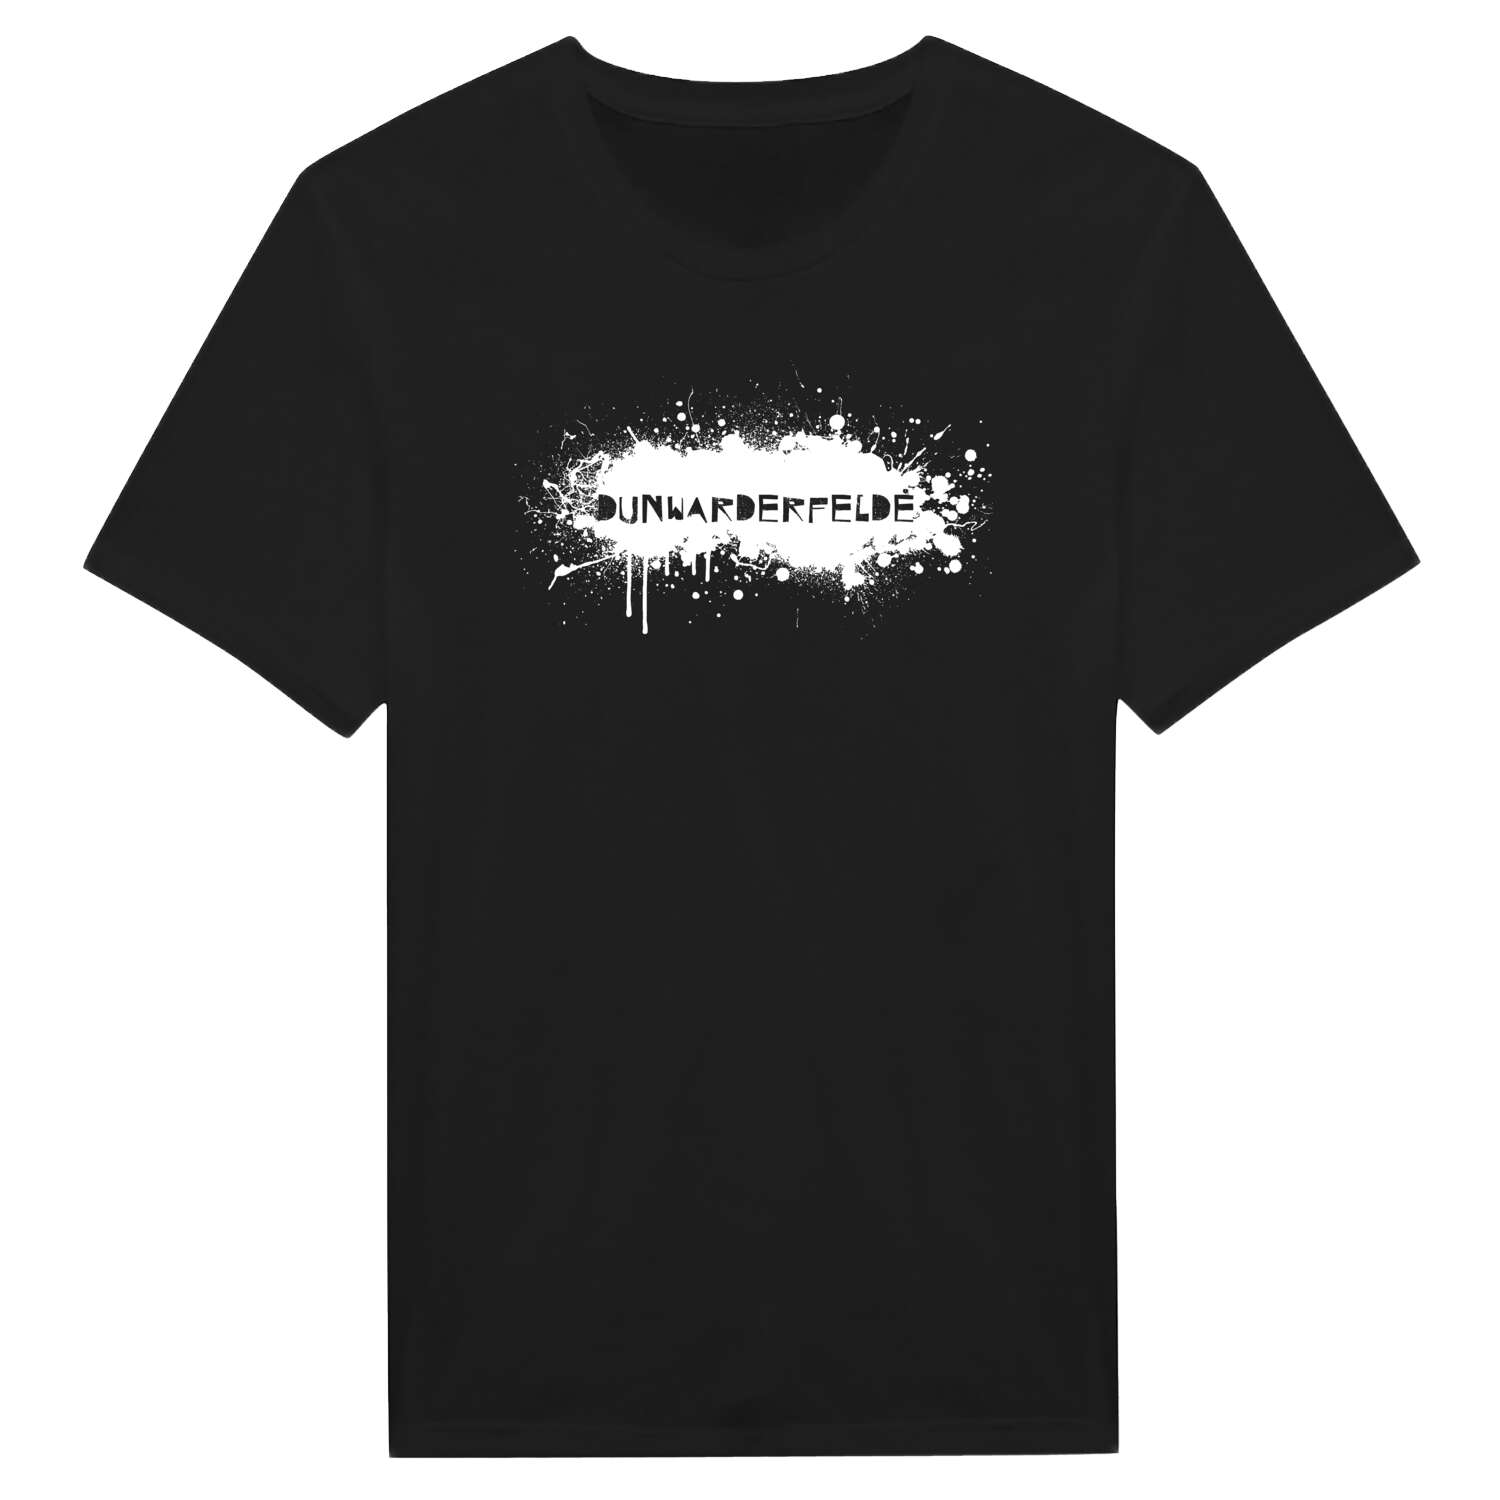 Dunwarderfelde T-Shirt »Paint Splash Punk«